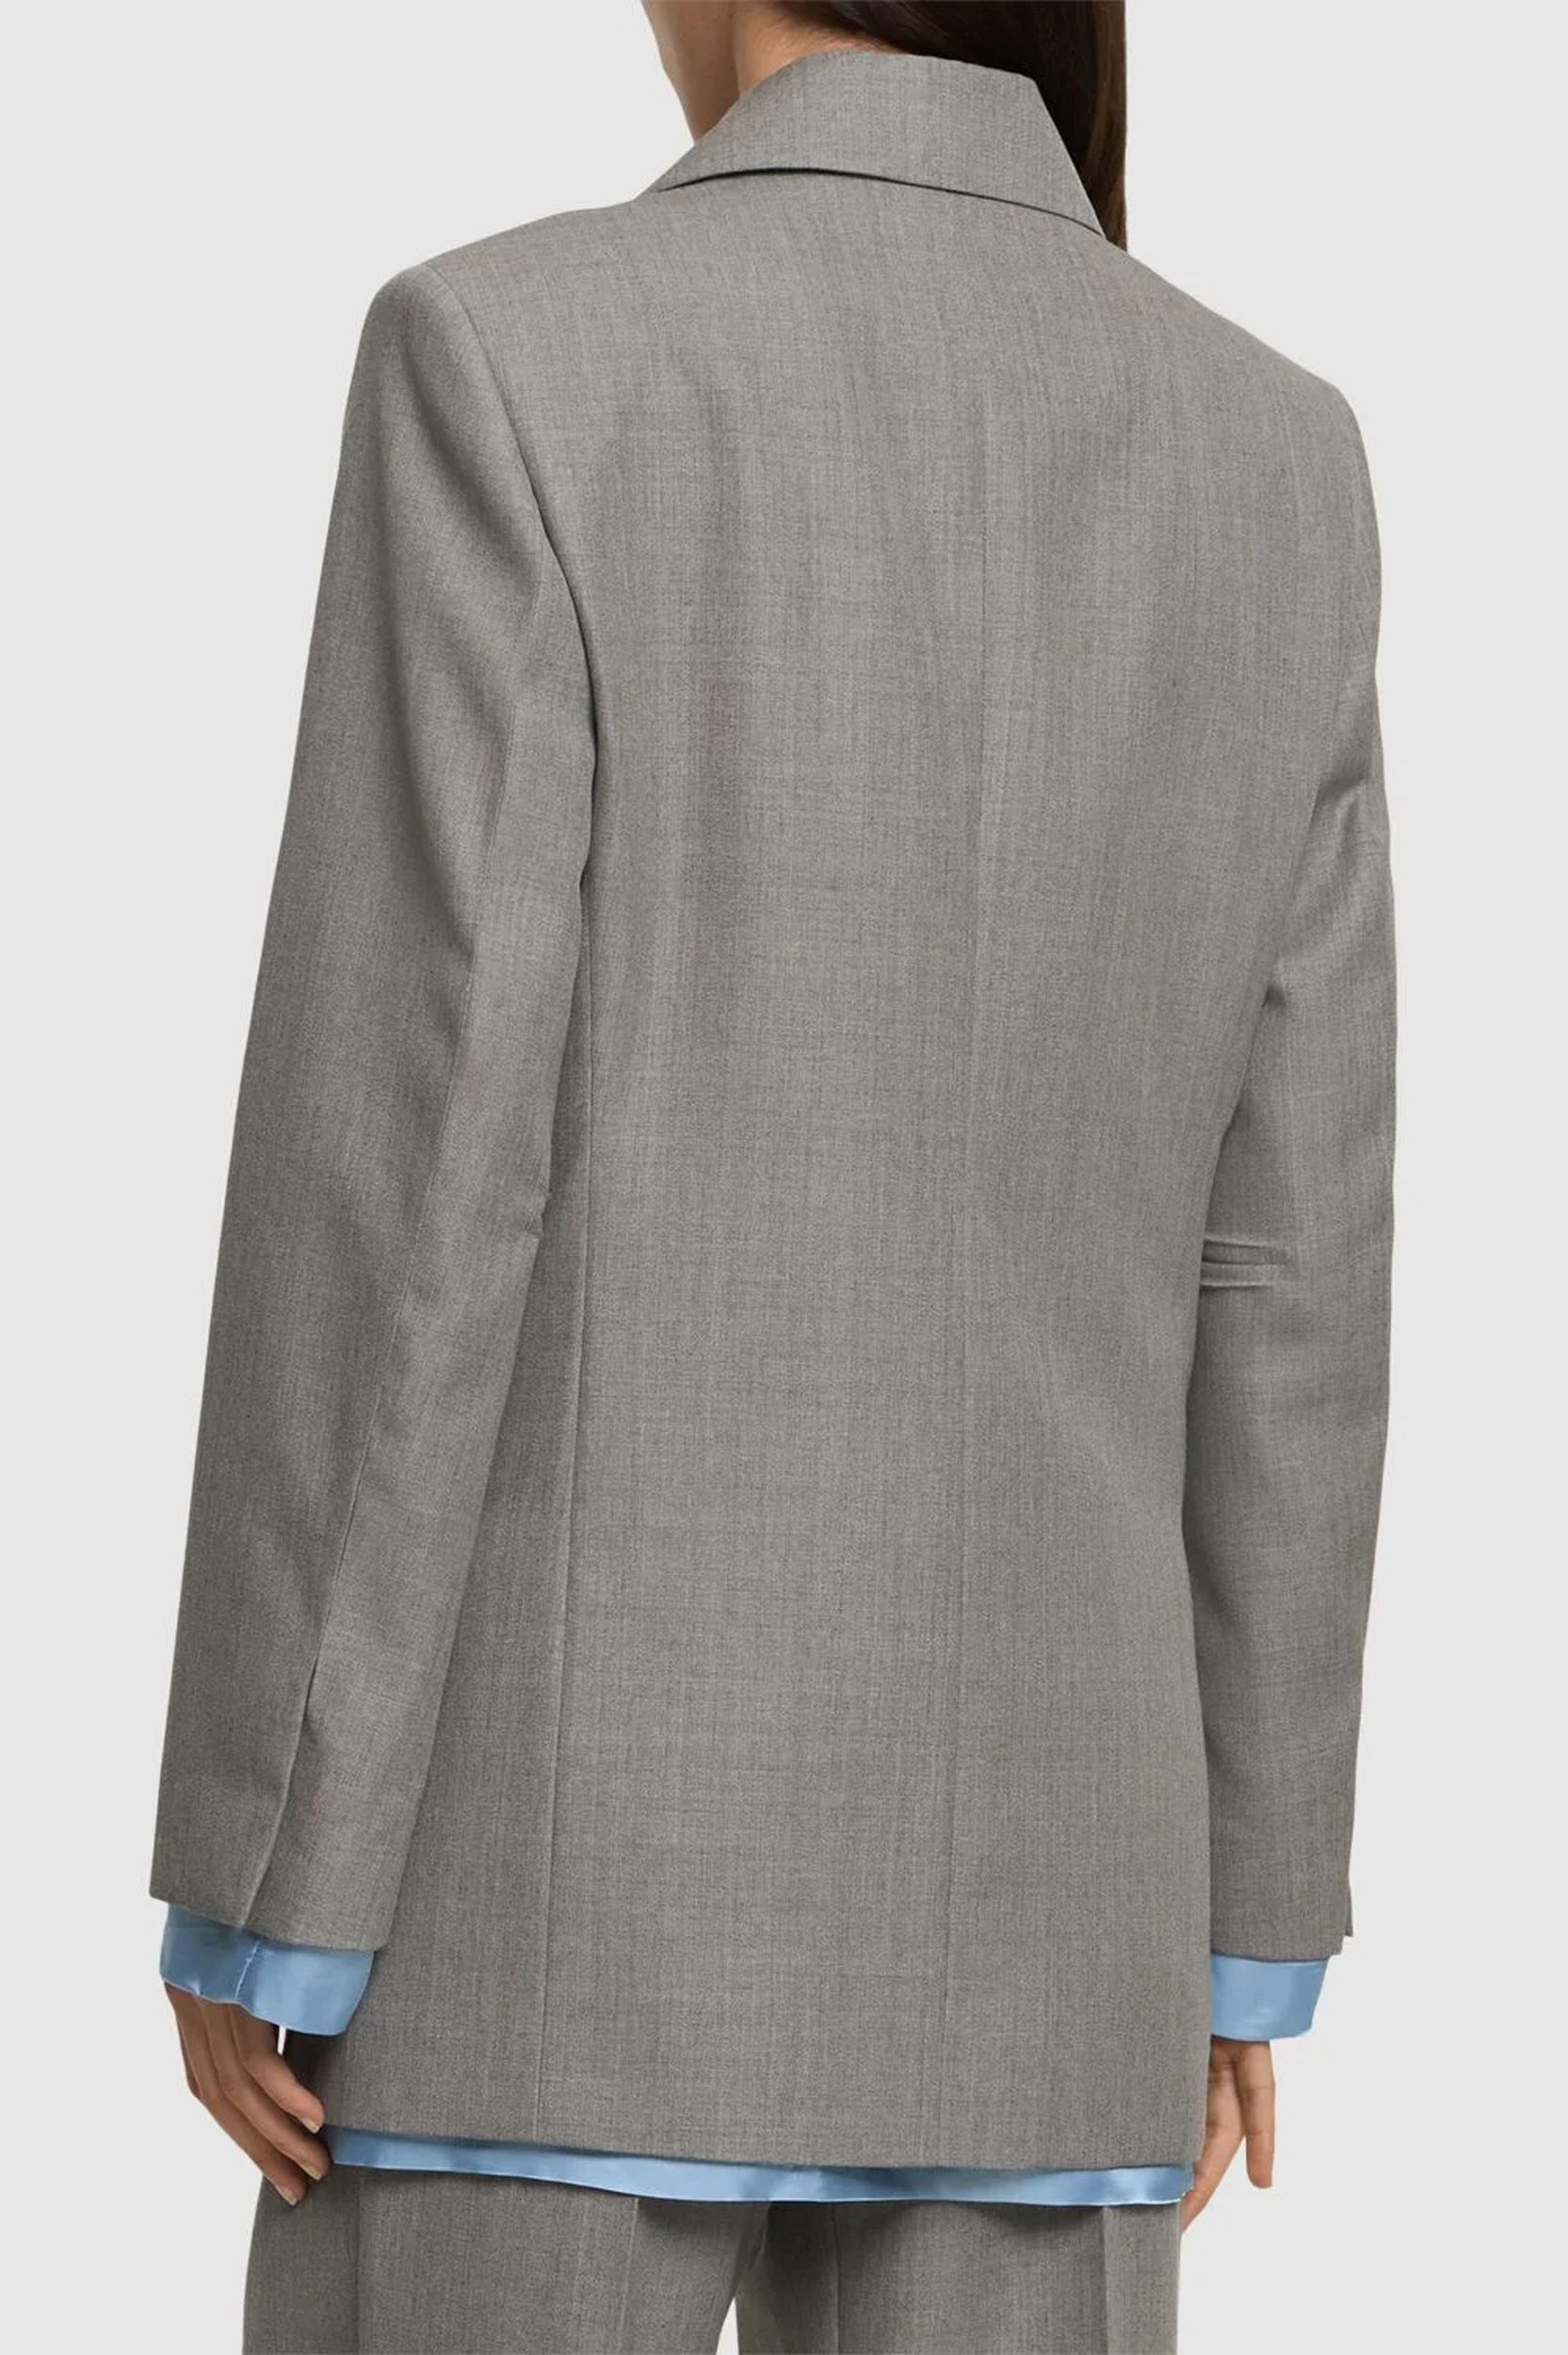 Darted Sleeve Tailored Jacket in Titanium